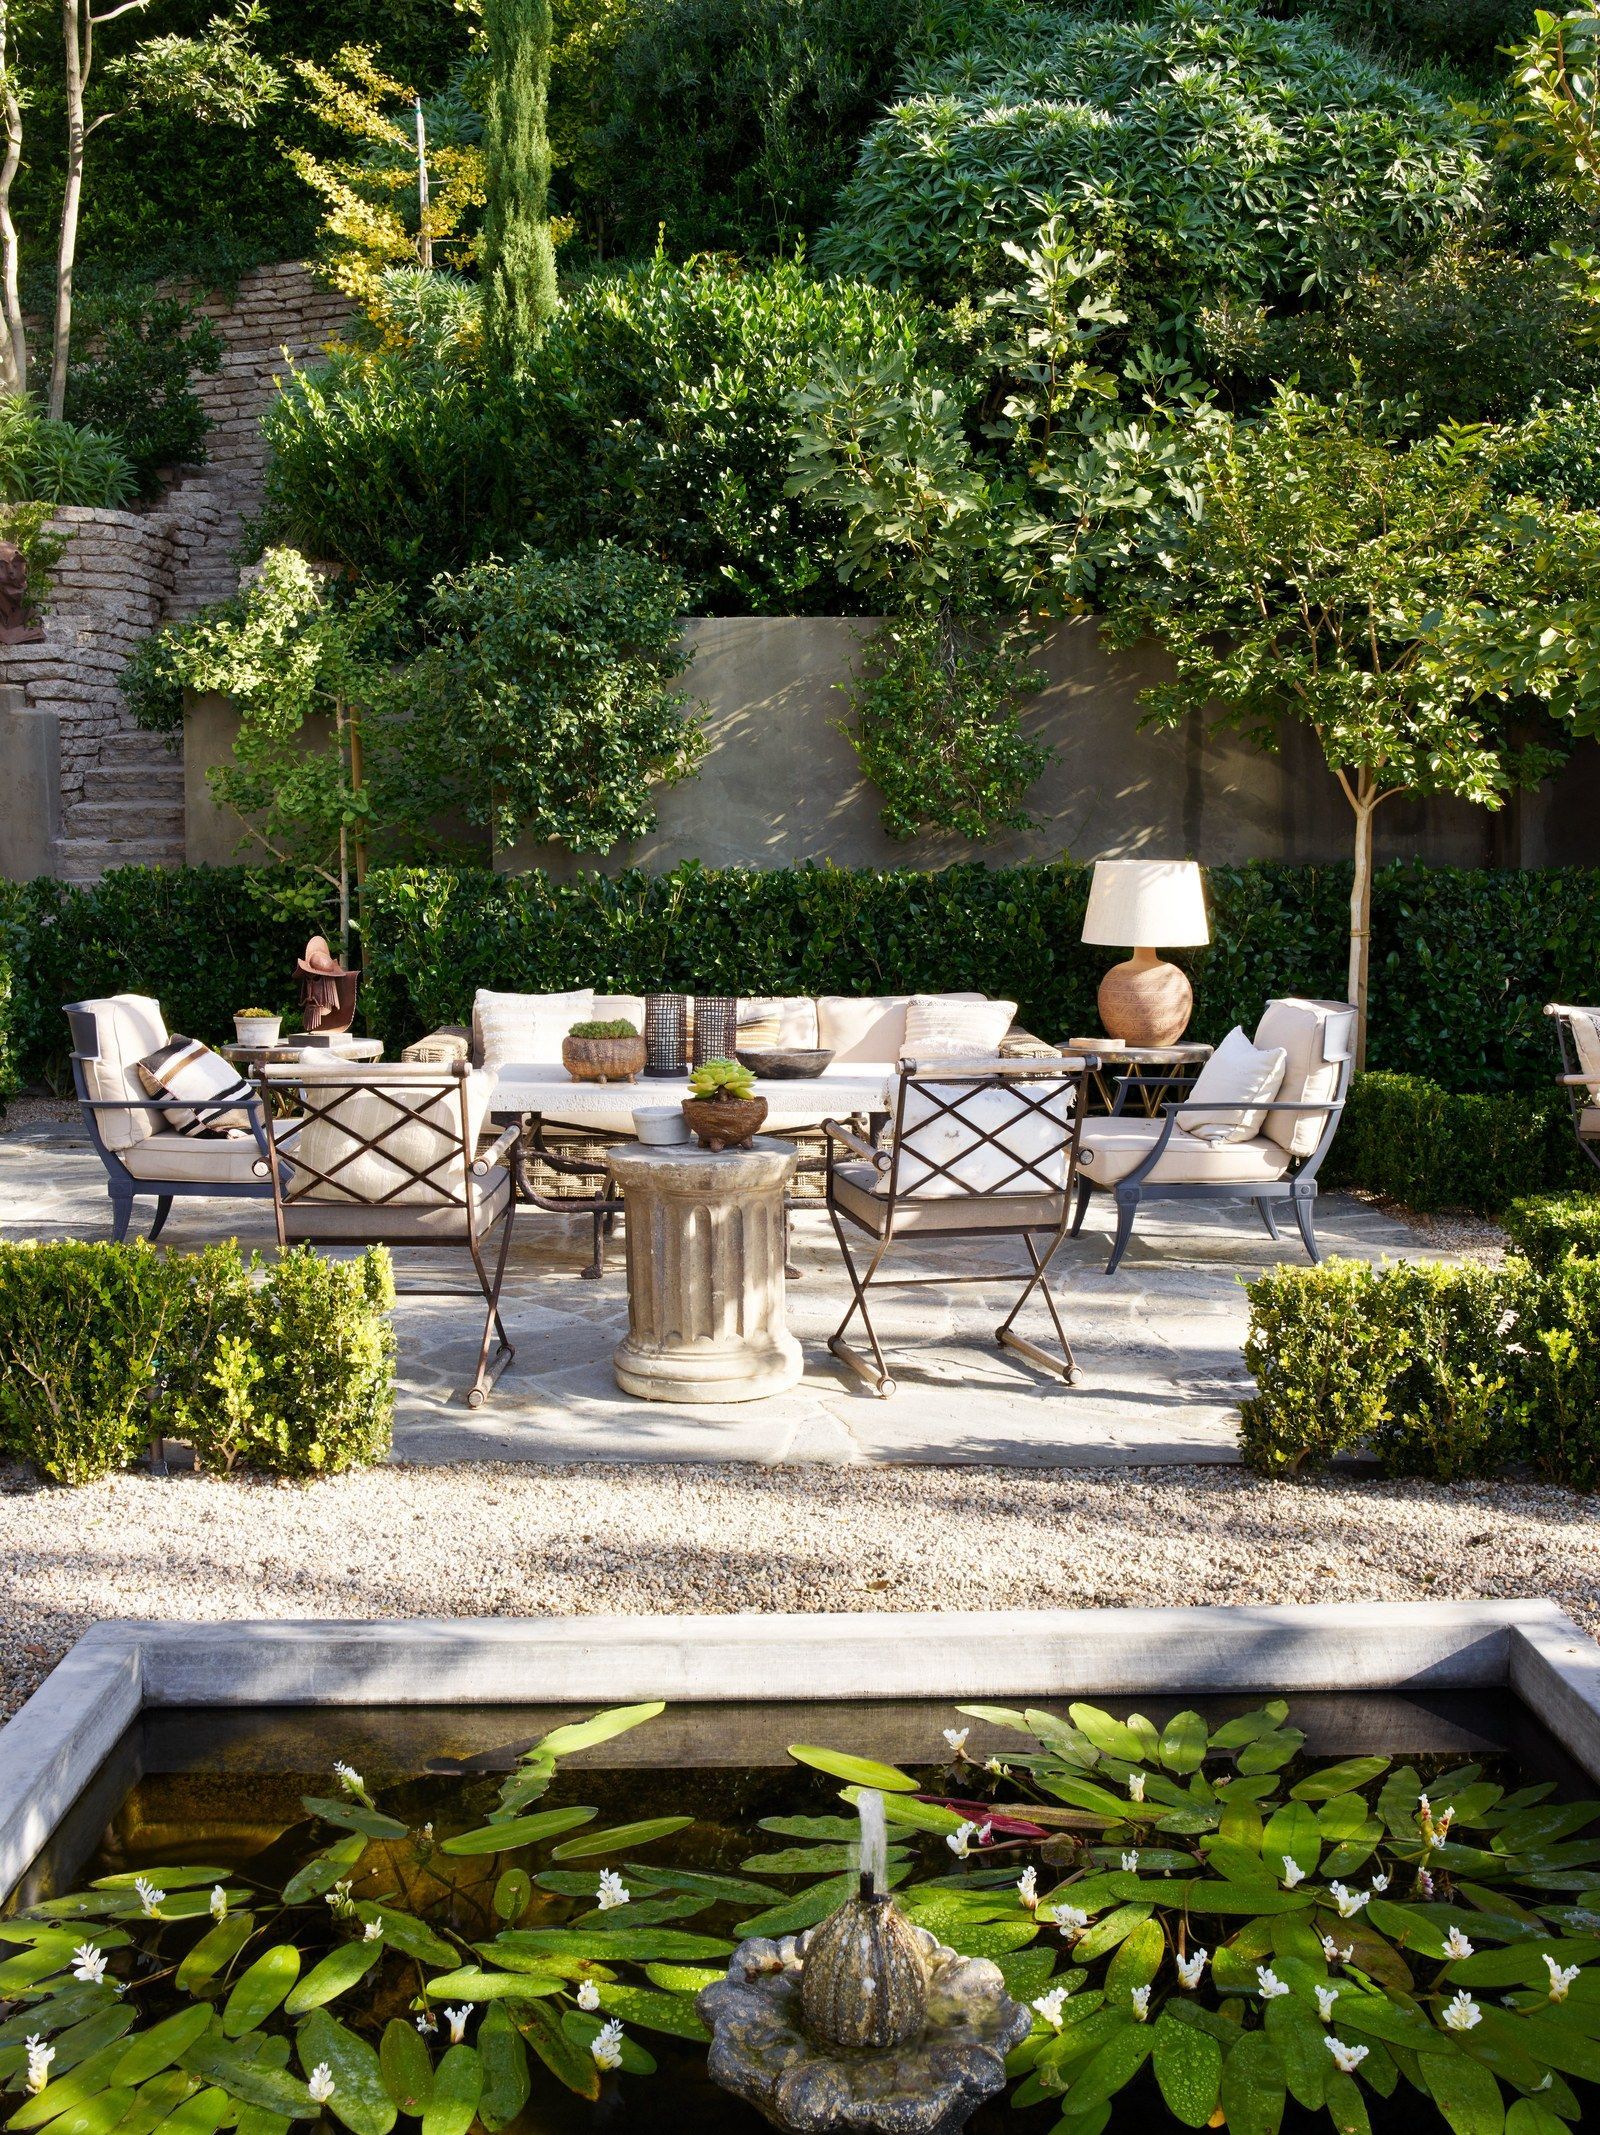 AD100 Designer Jean-Louis Deniot Reveals His Historic Los Angeles Abode -   10 garden design Mediterranean terraces ideas